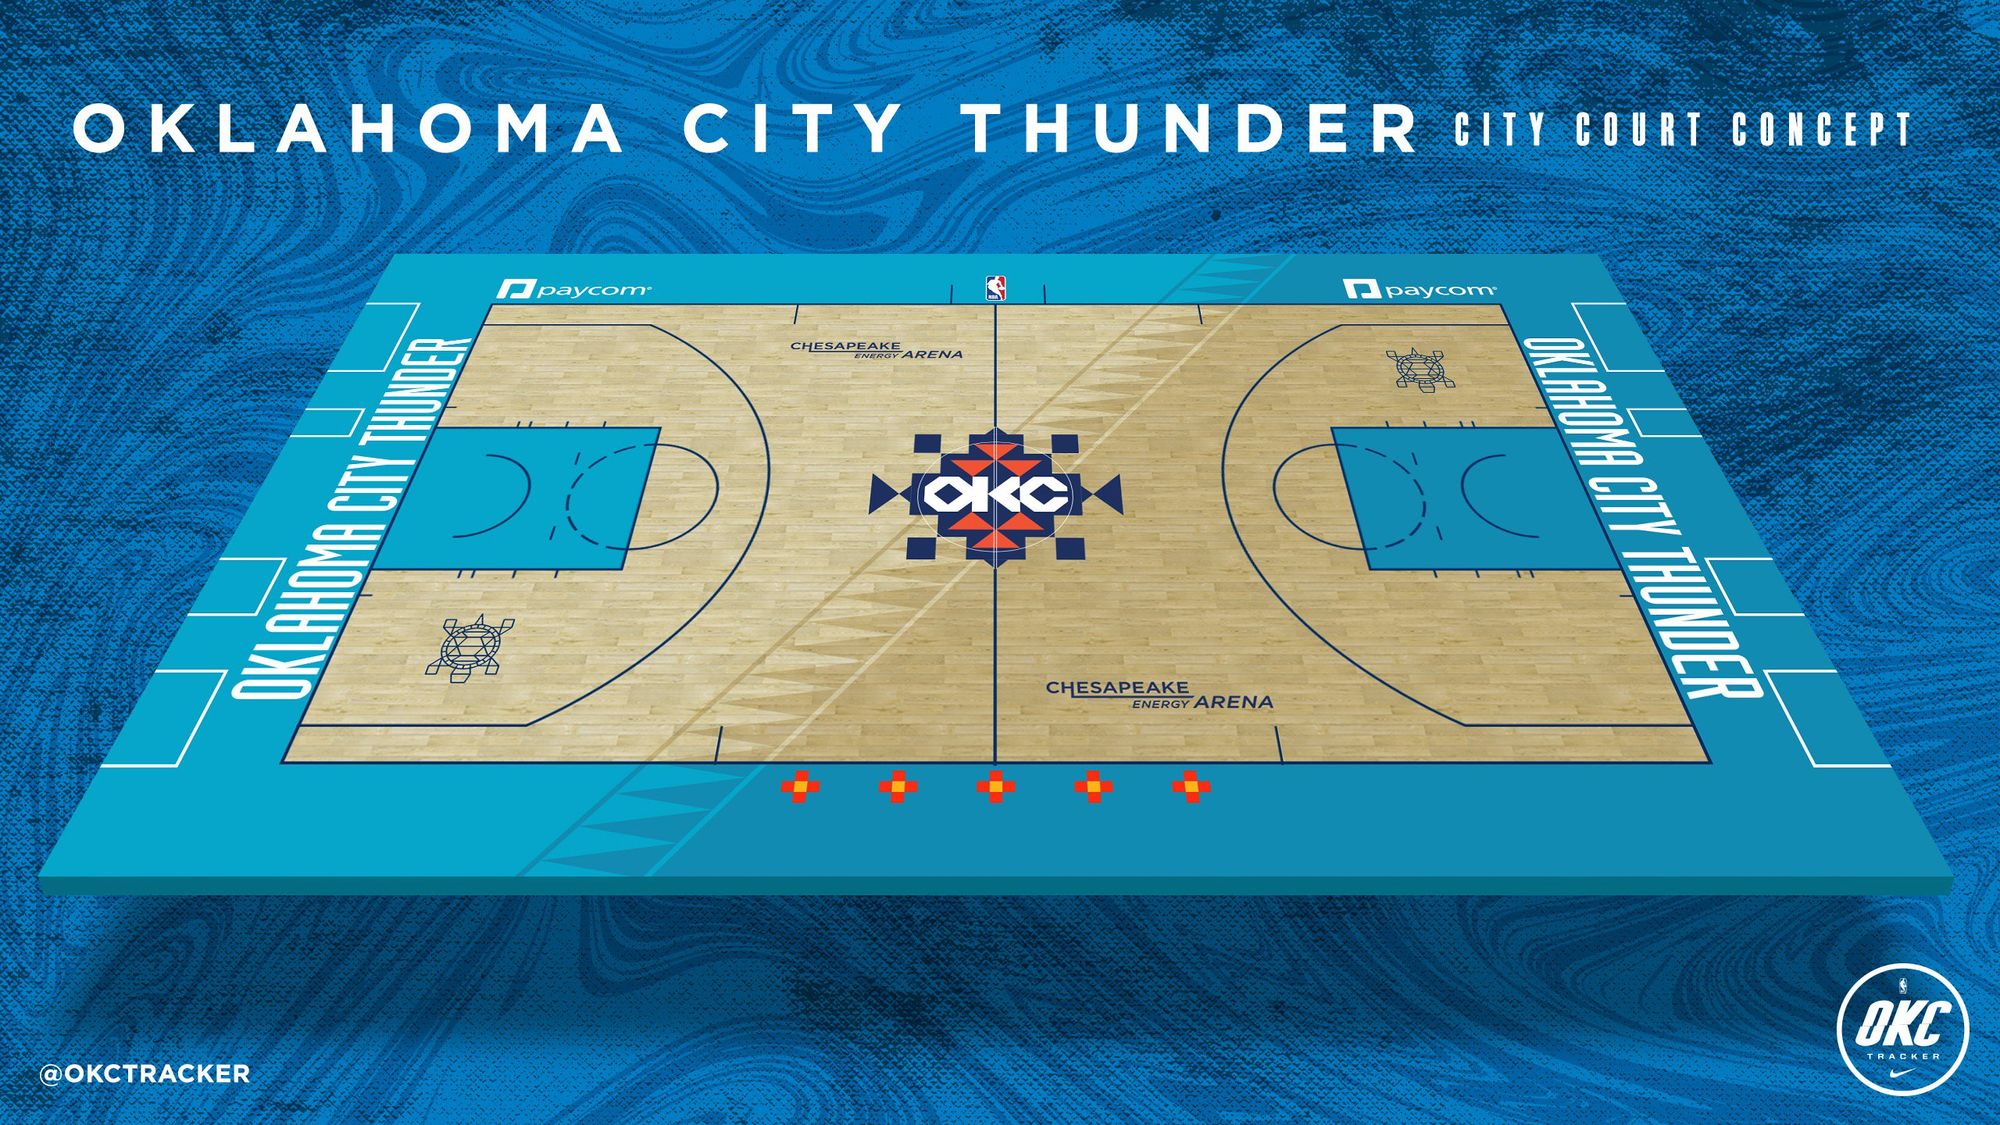 Oklahoma City Thunder Concept Rebrand – Hooped Up